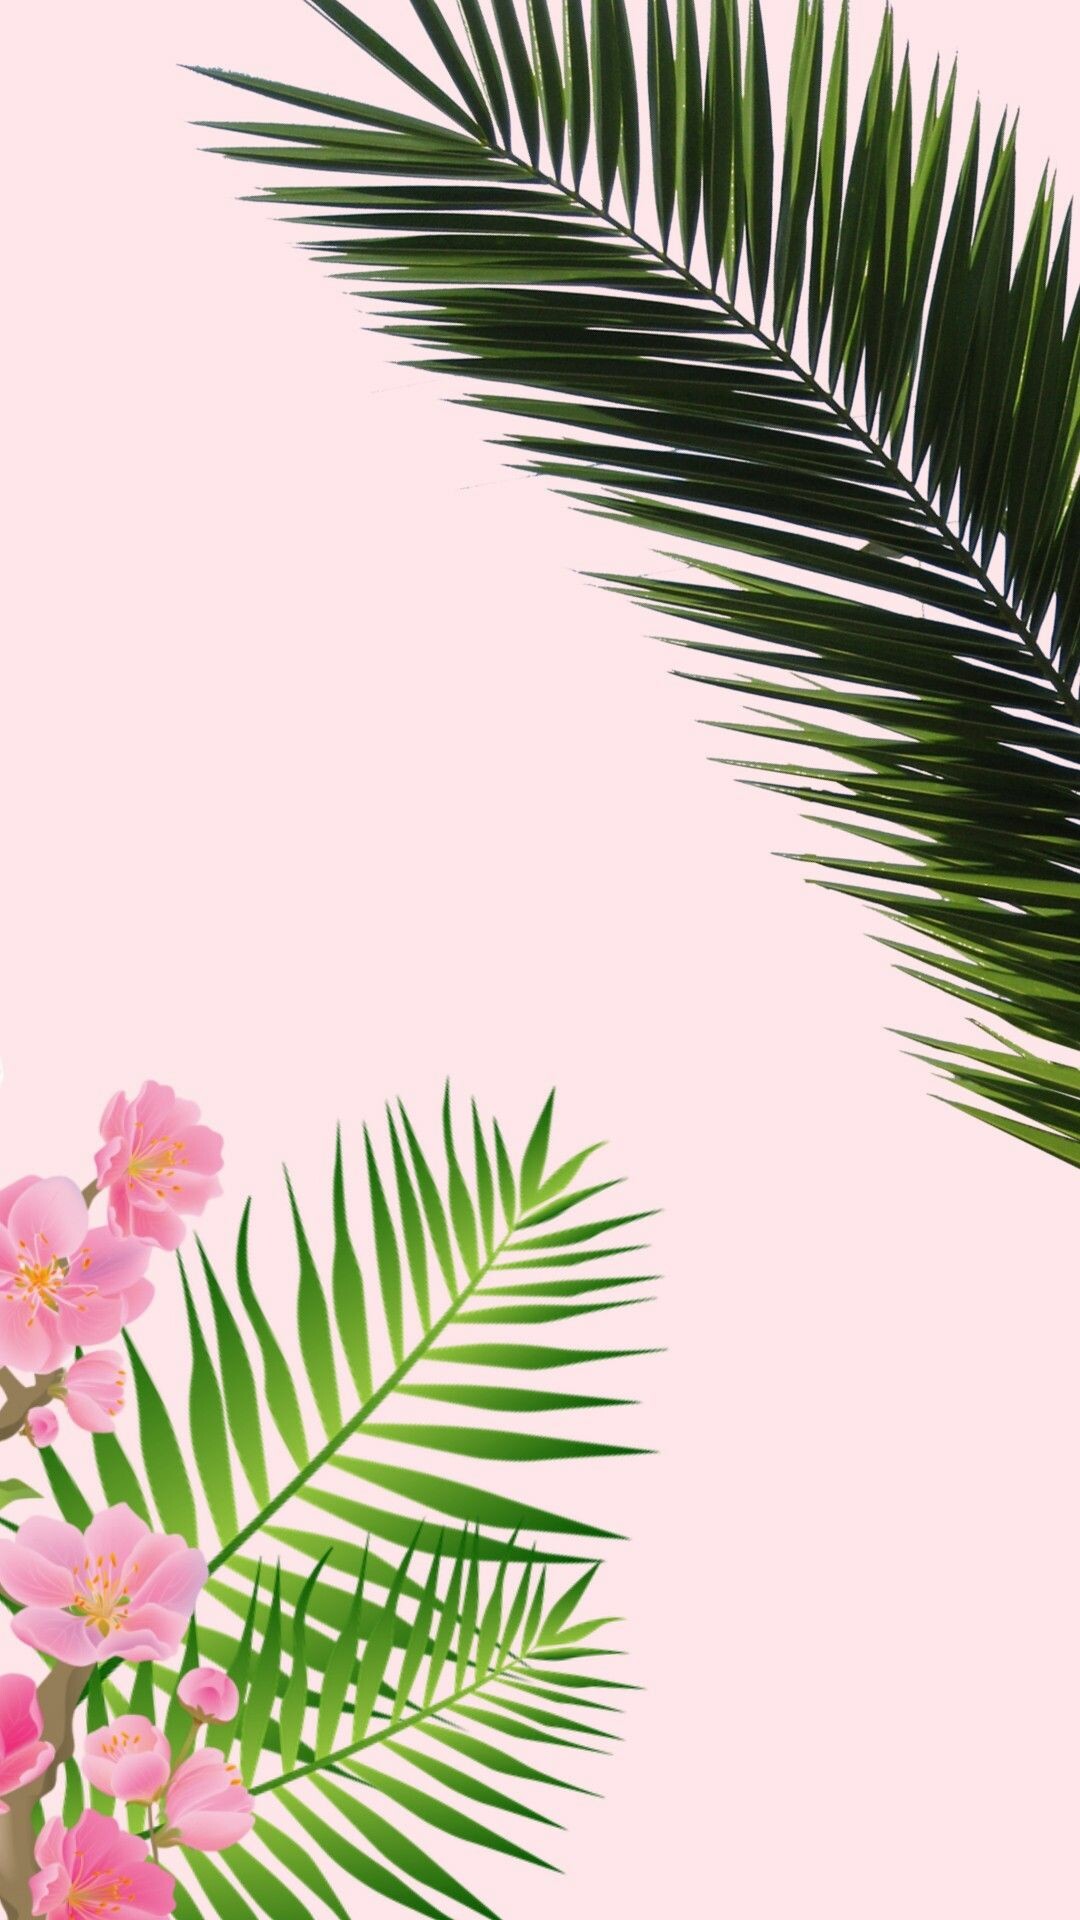 Palm Tree: A symbol of victory, triumph, peace, Arecaceae. 1080x1920 Full HD Wallpaper.